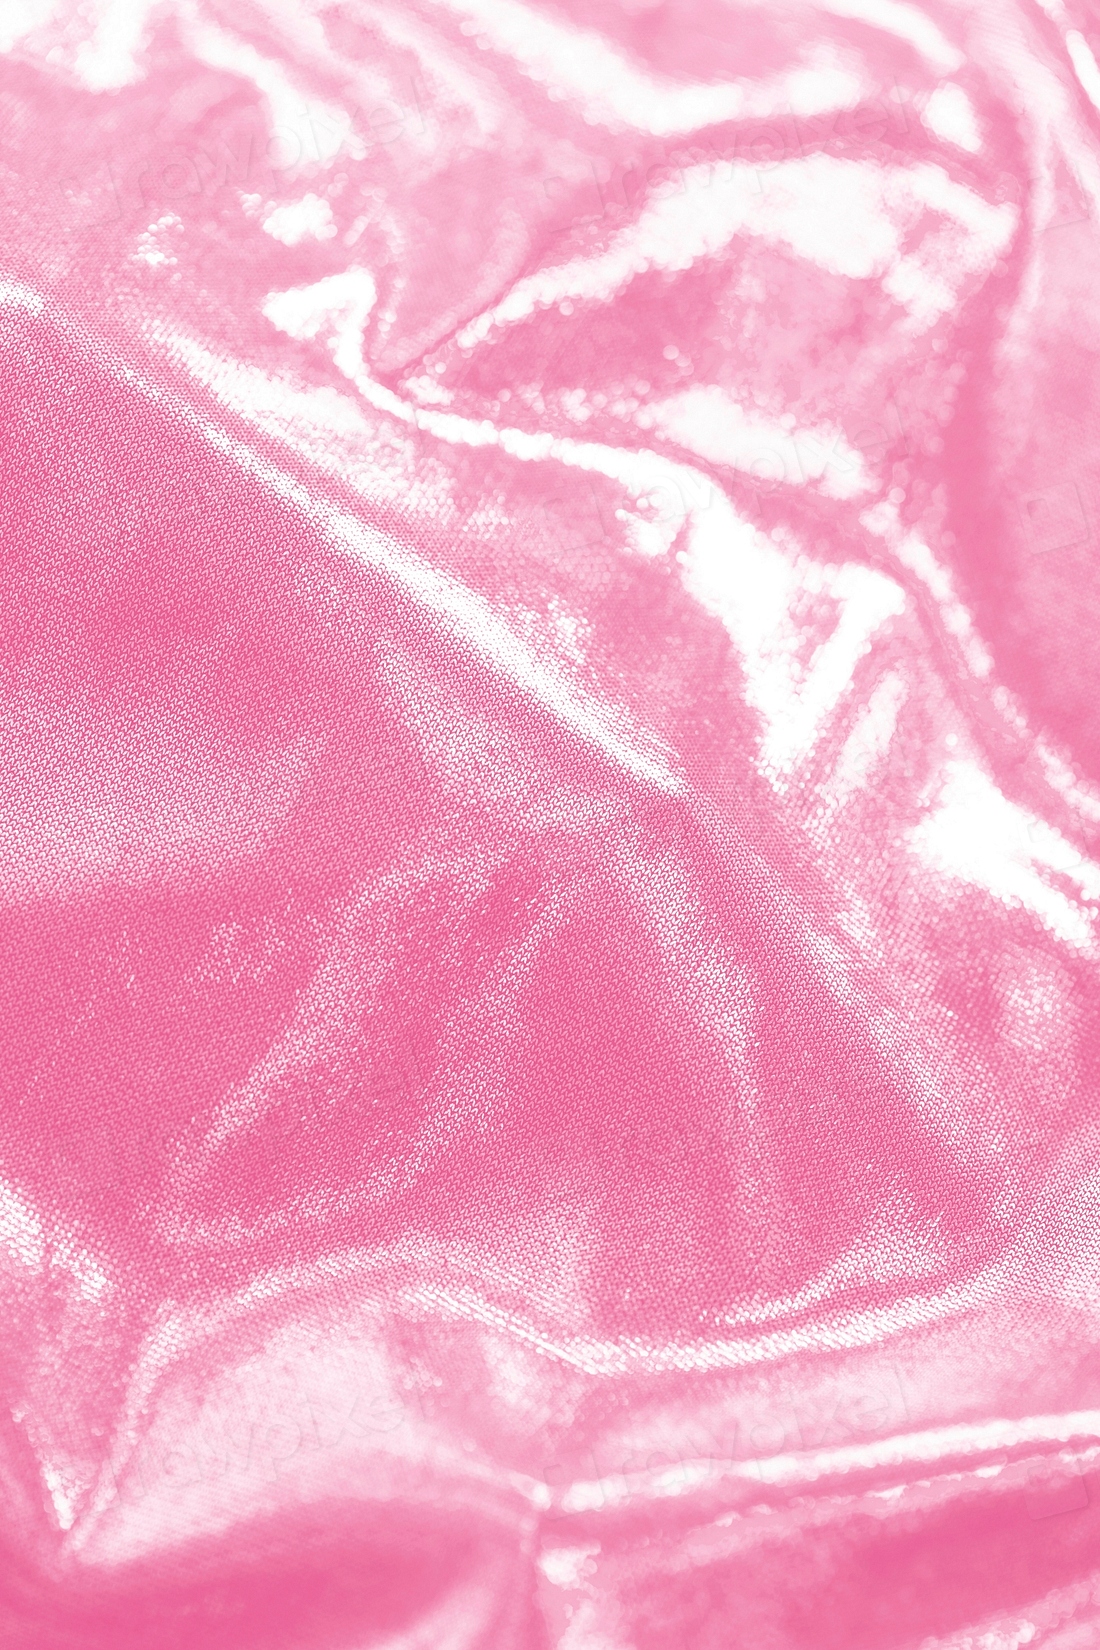 Shiny taffy pink fabric textured | Premium Photo - rawpixel